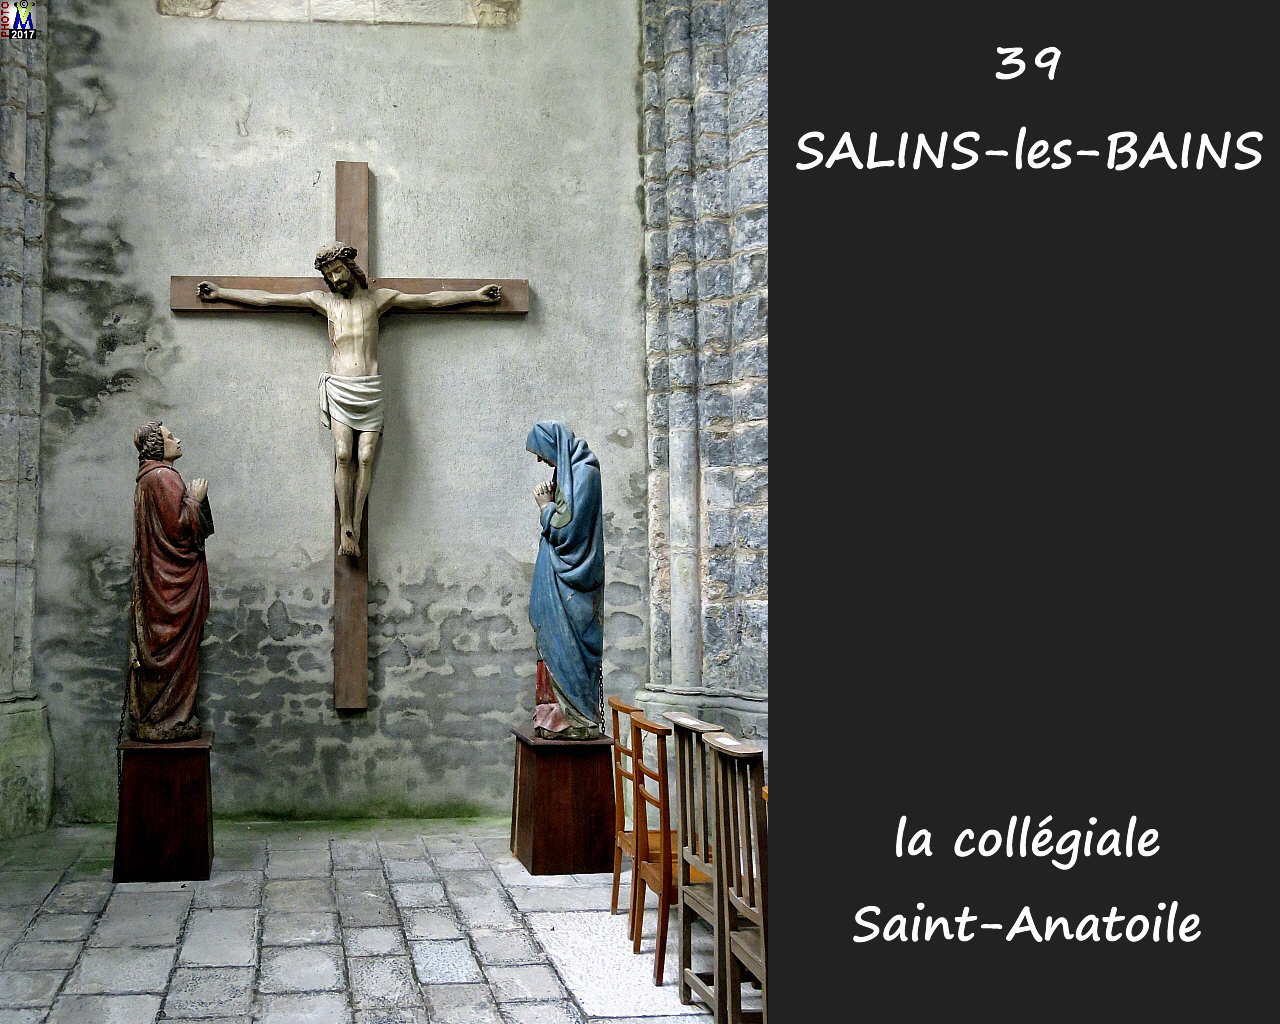 39SALINS-LES-BAINS_collegiale_234.jpg